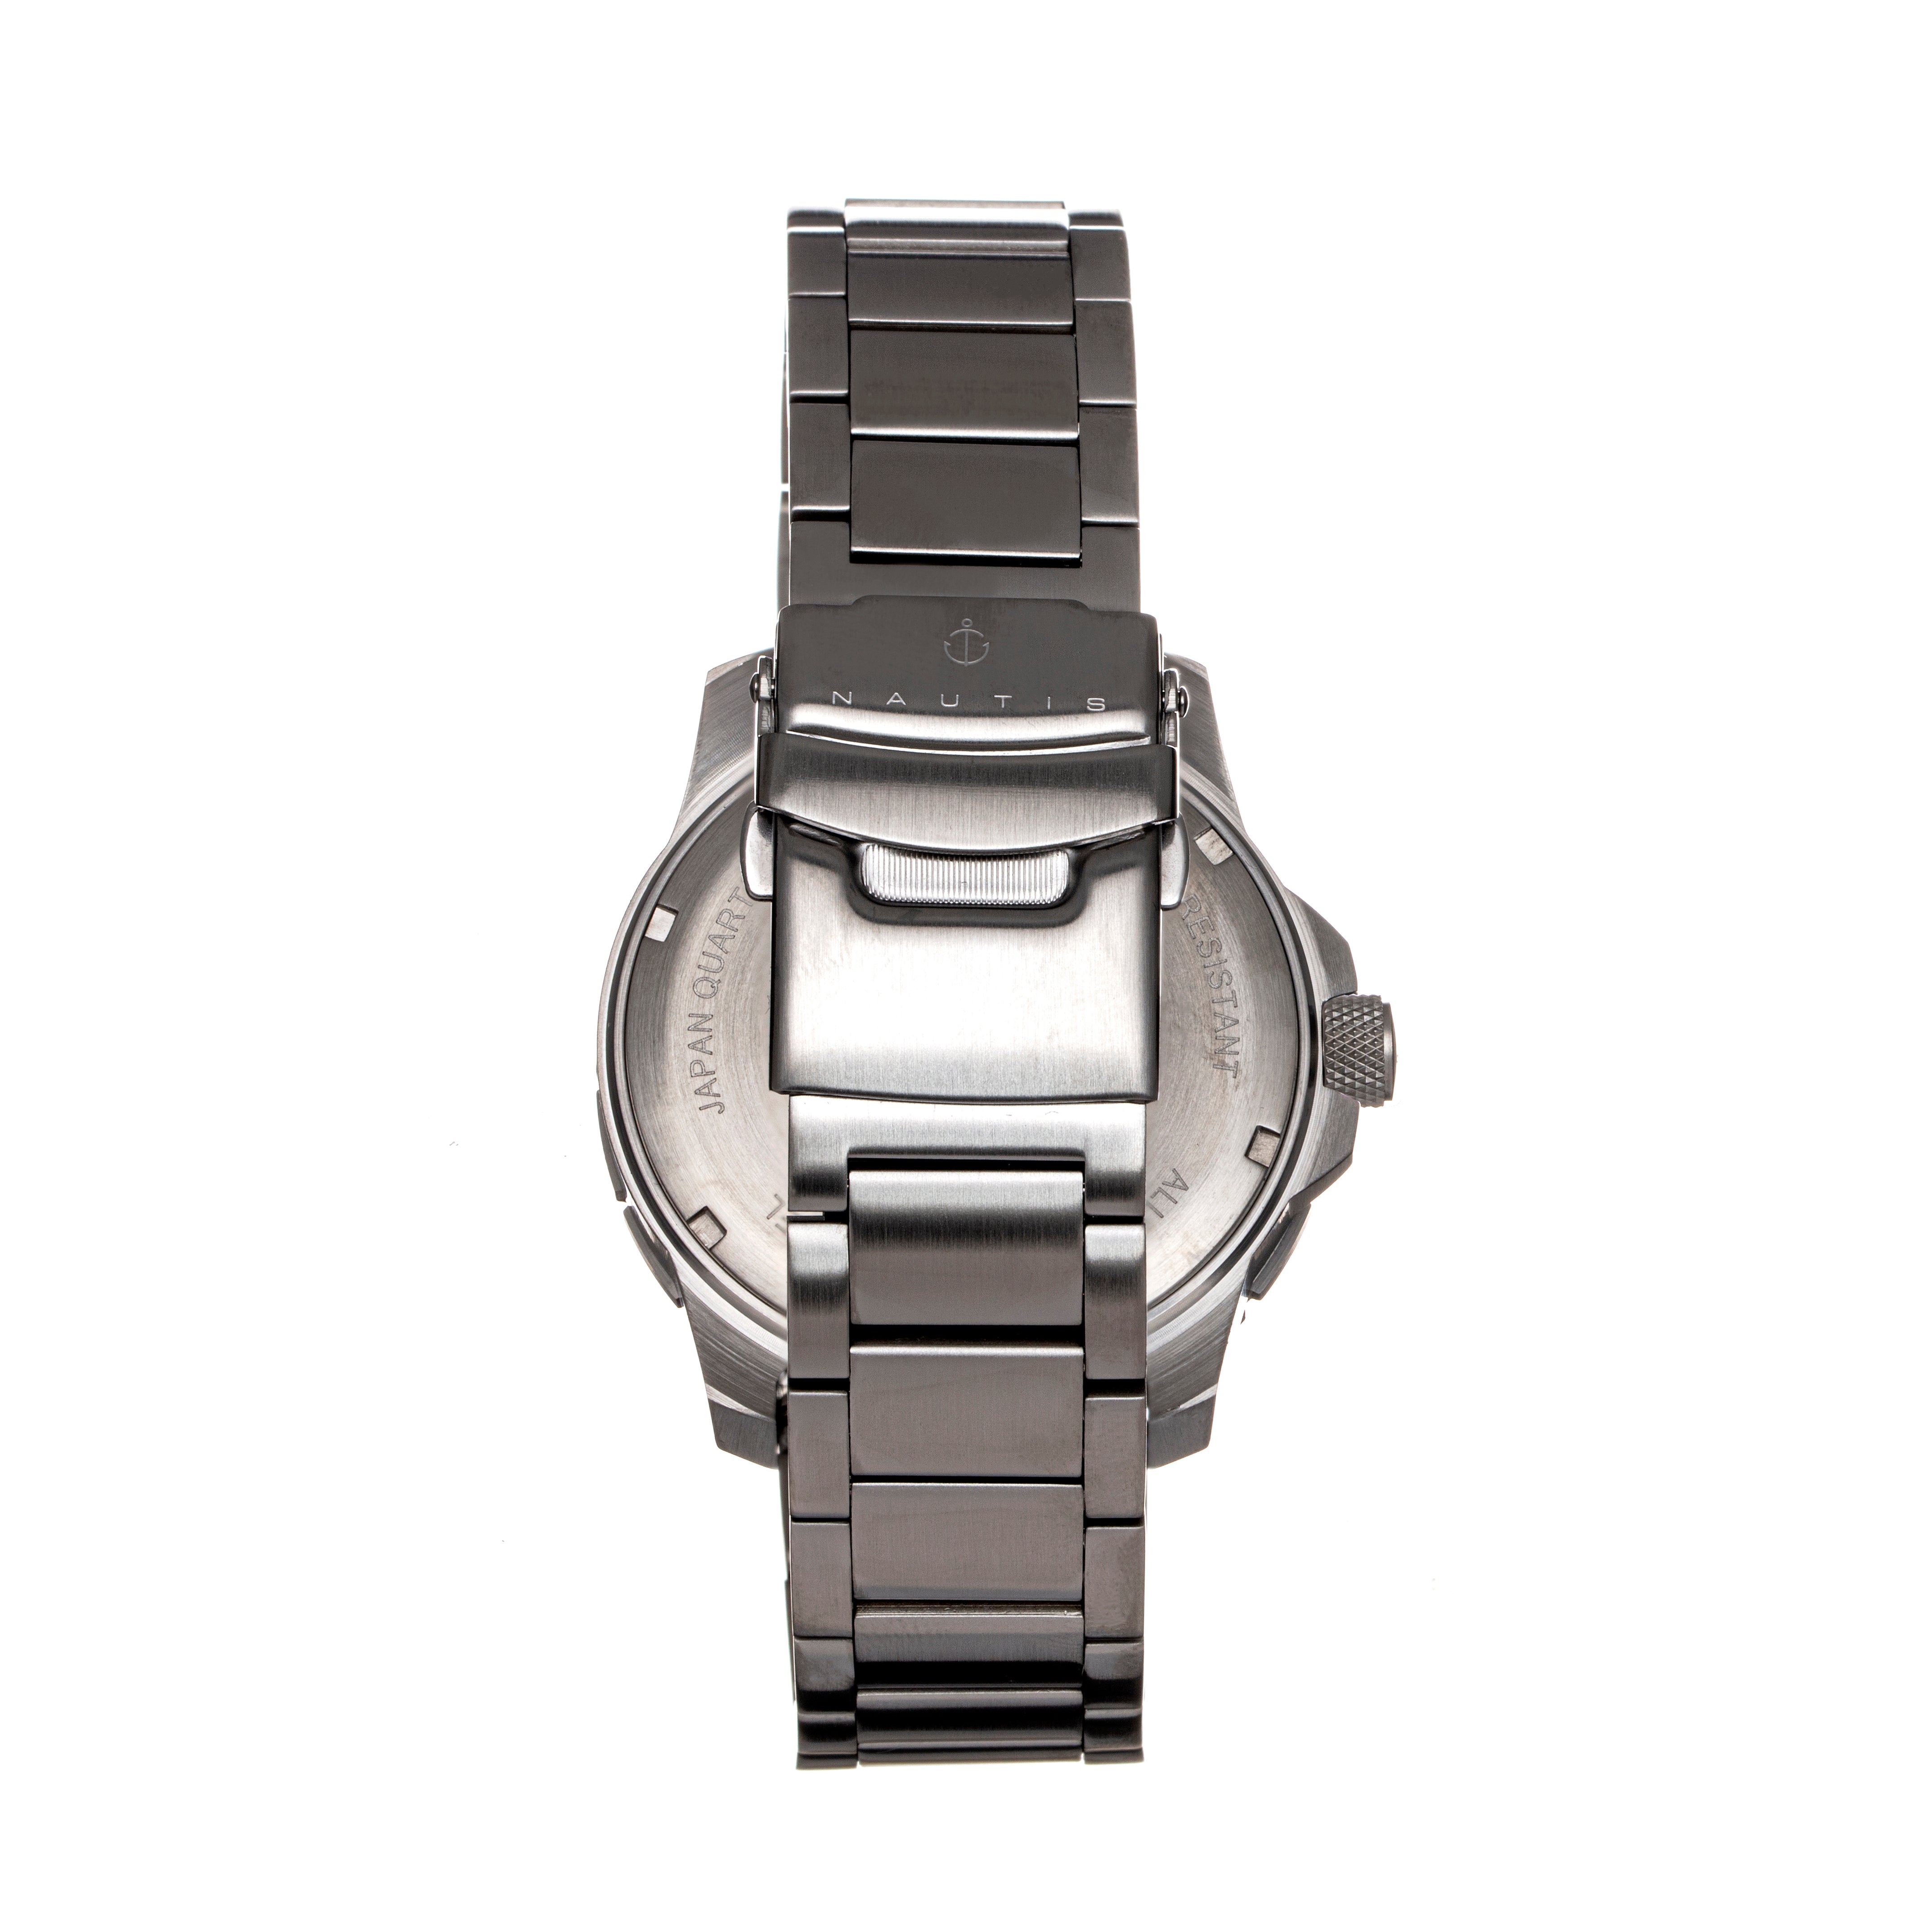 Nautis Admiralty Pro 200 Bracelet Watch w/Date - Multicolor/Black  - GL2008-C